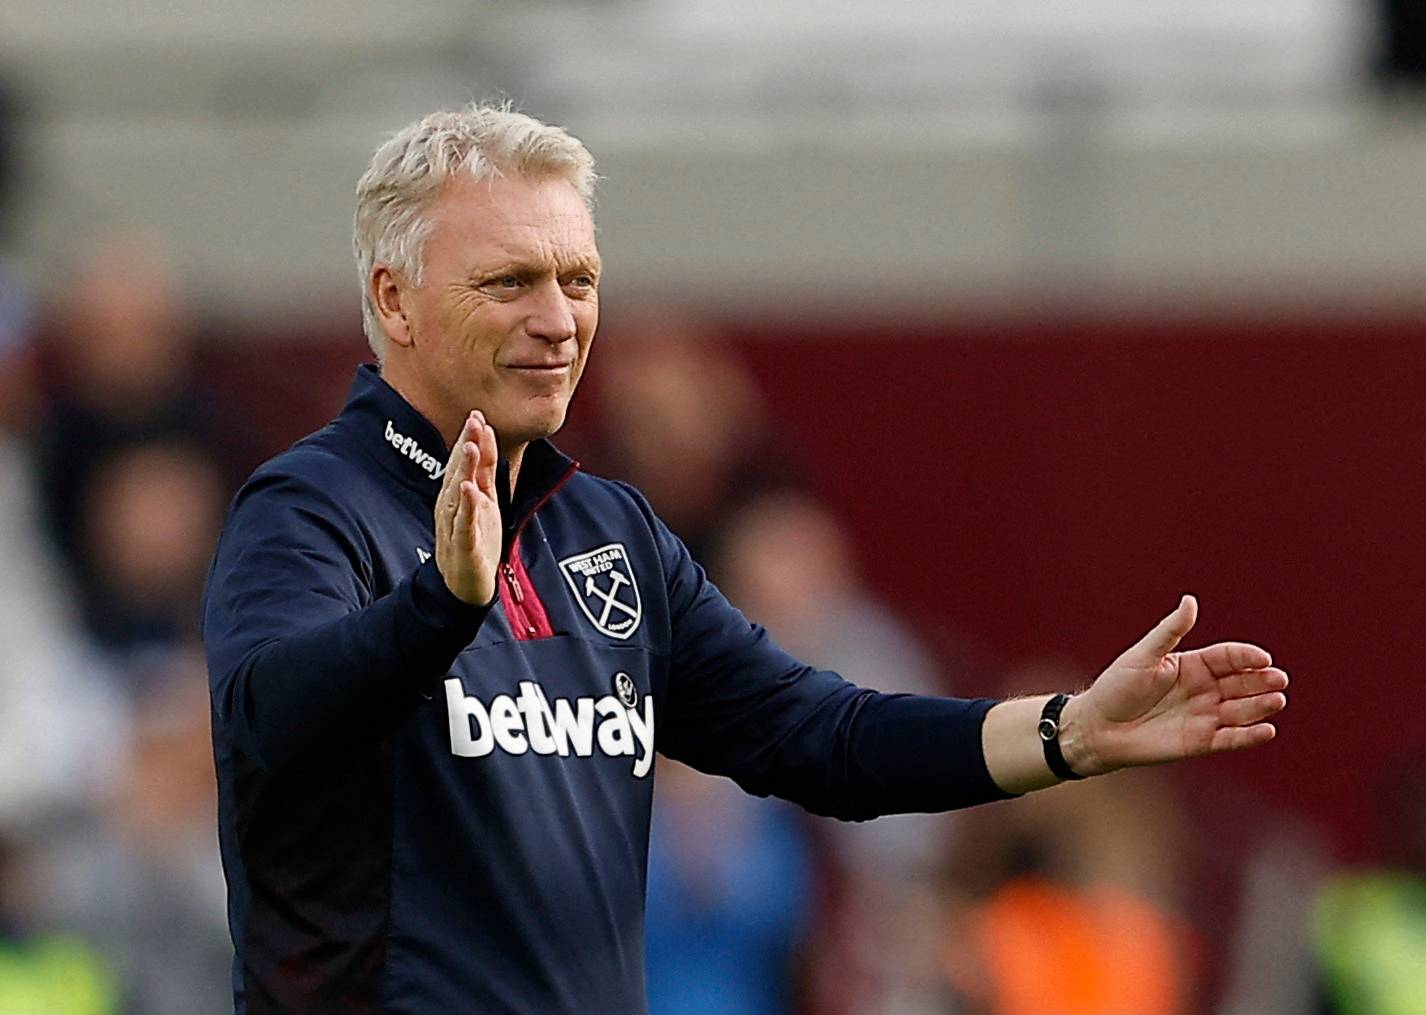 West Ham United manager David Moyes looking pleased